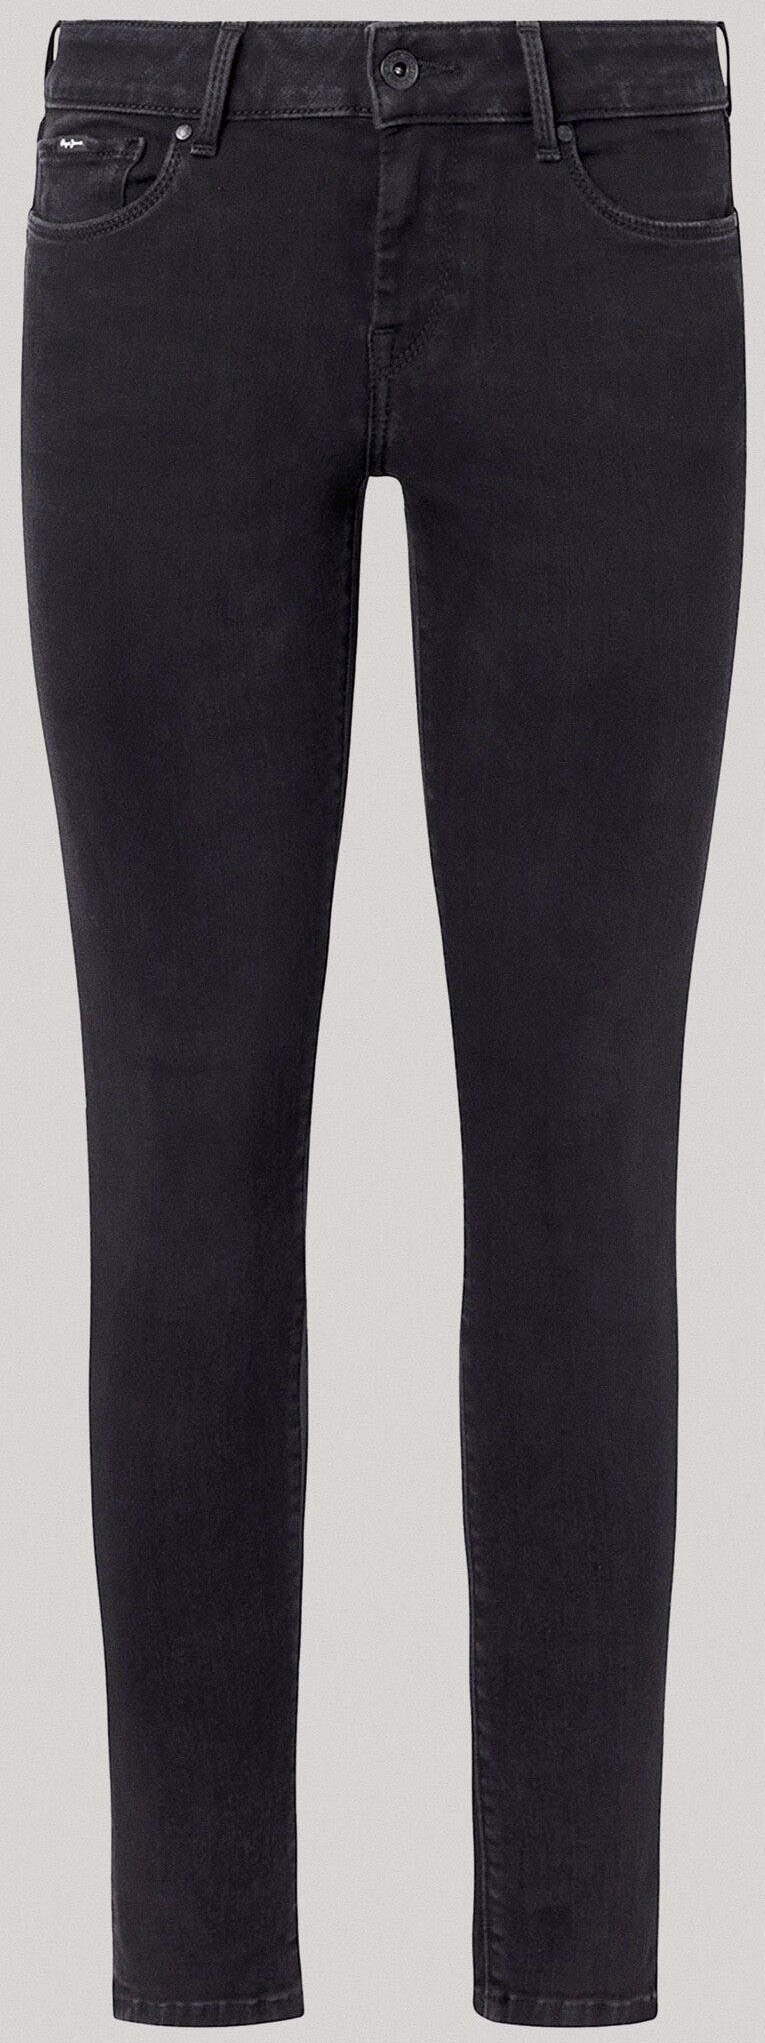 und Pepe SOHO mit 5-Pocket-Stil Stretch-Anteil black 1-Knopf Jeans im Skinny-fit-Jeans Bund